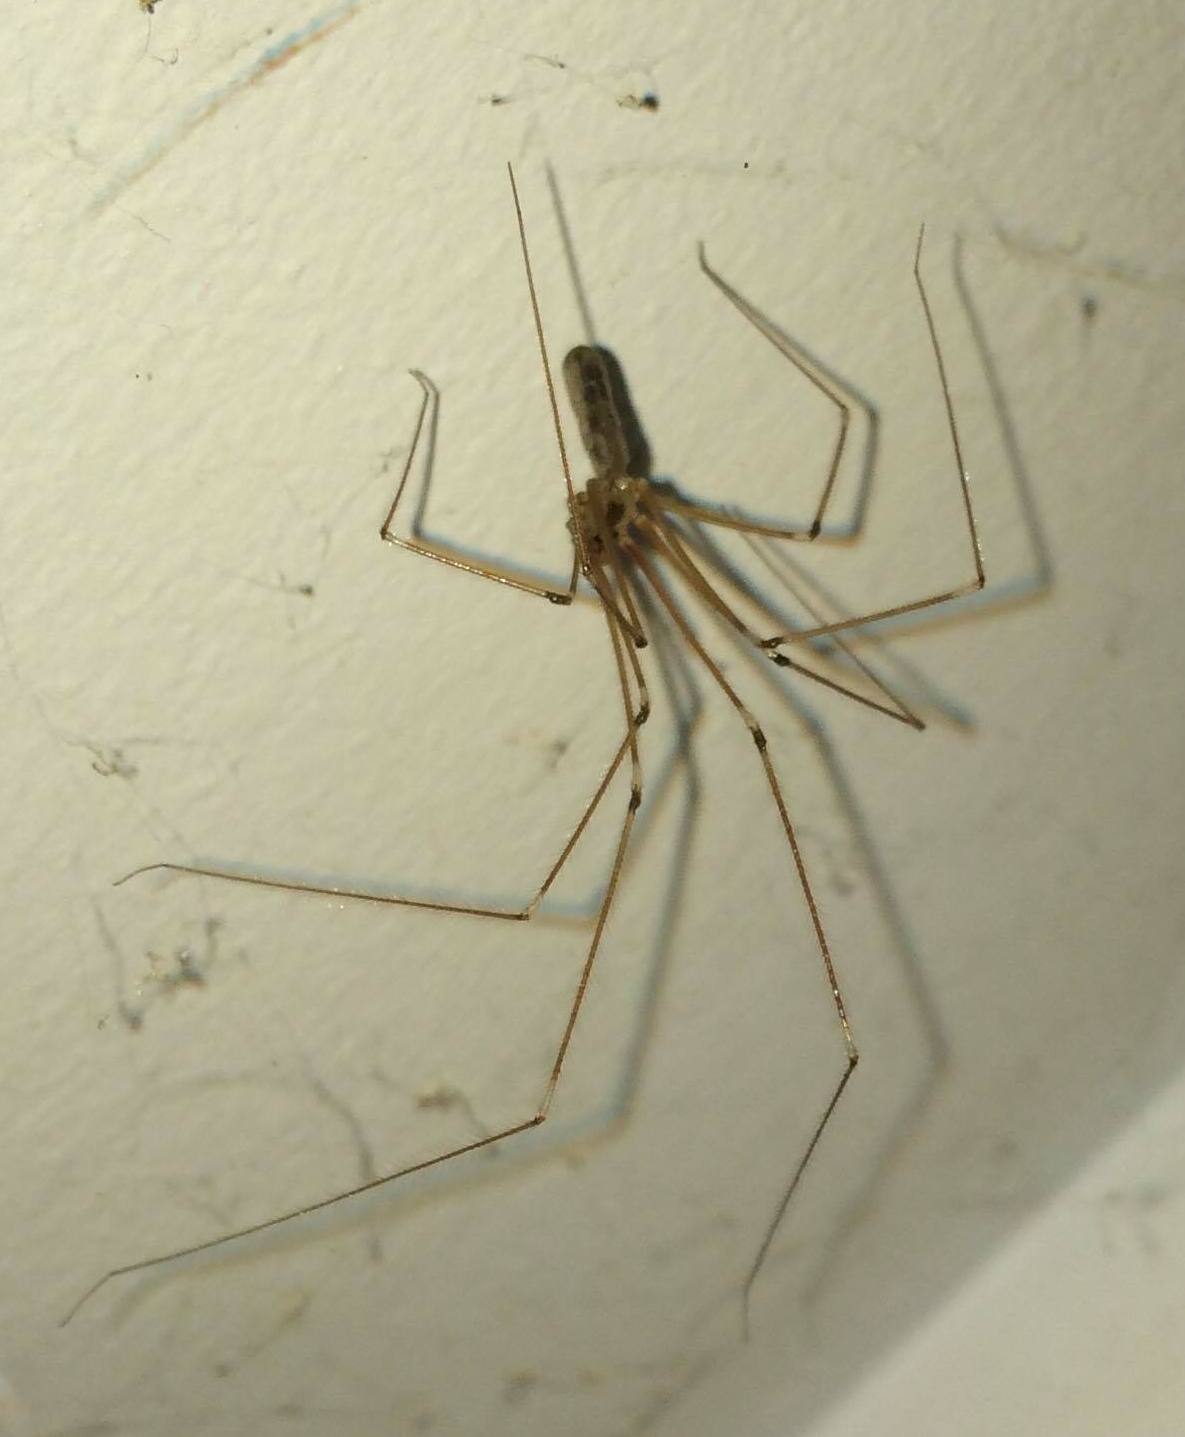 Pholcidae spider